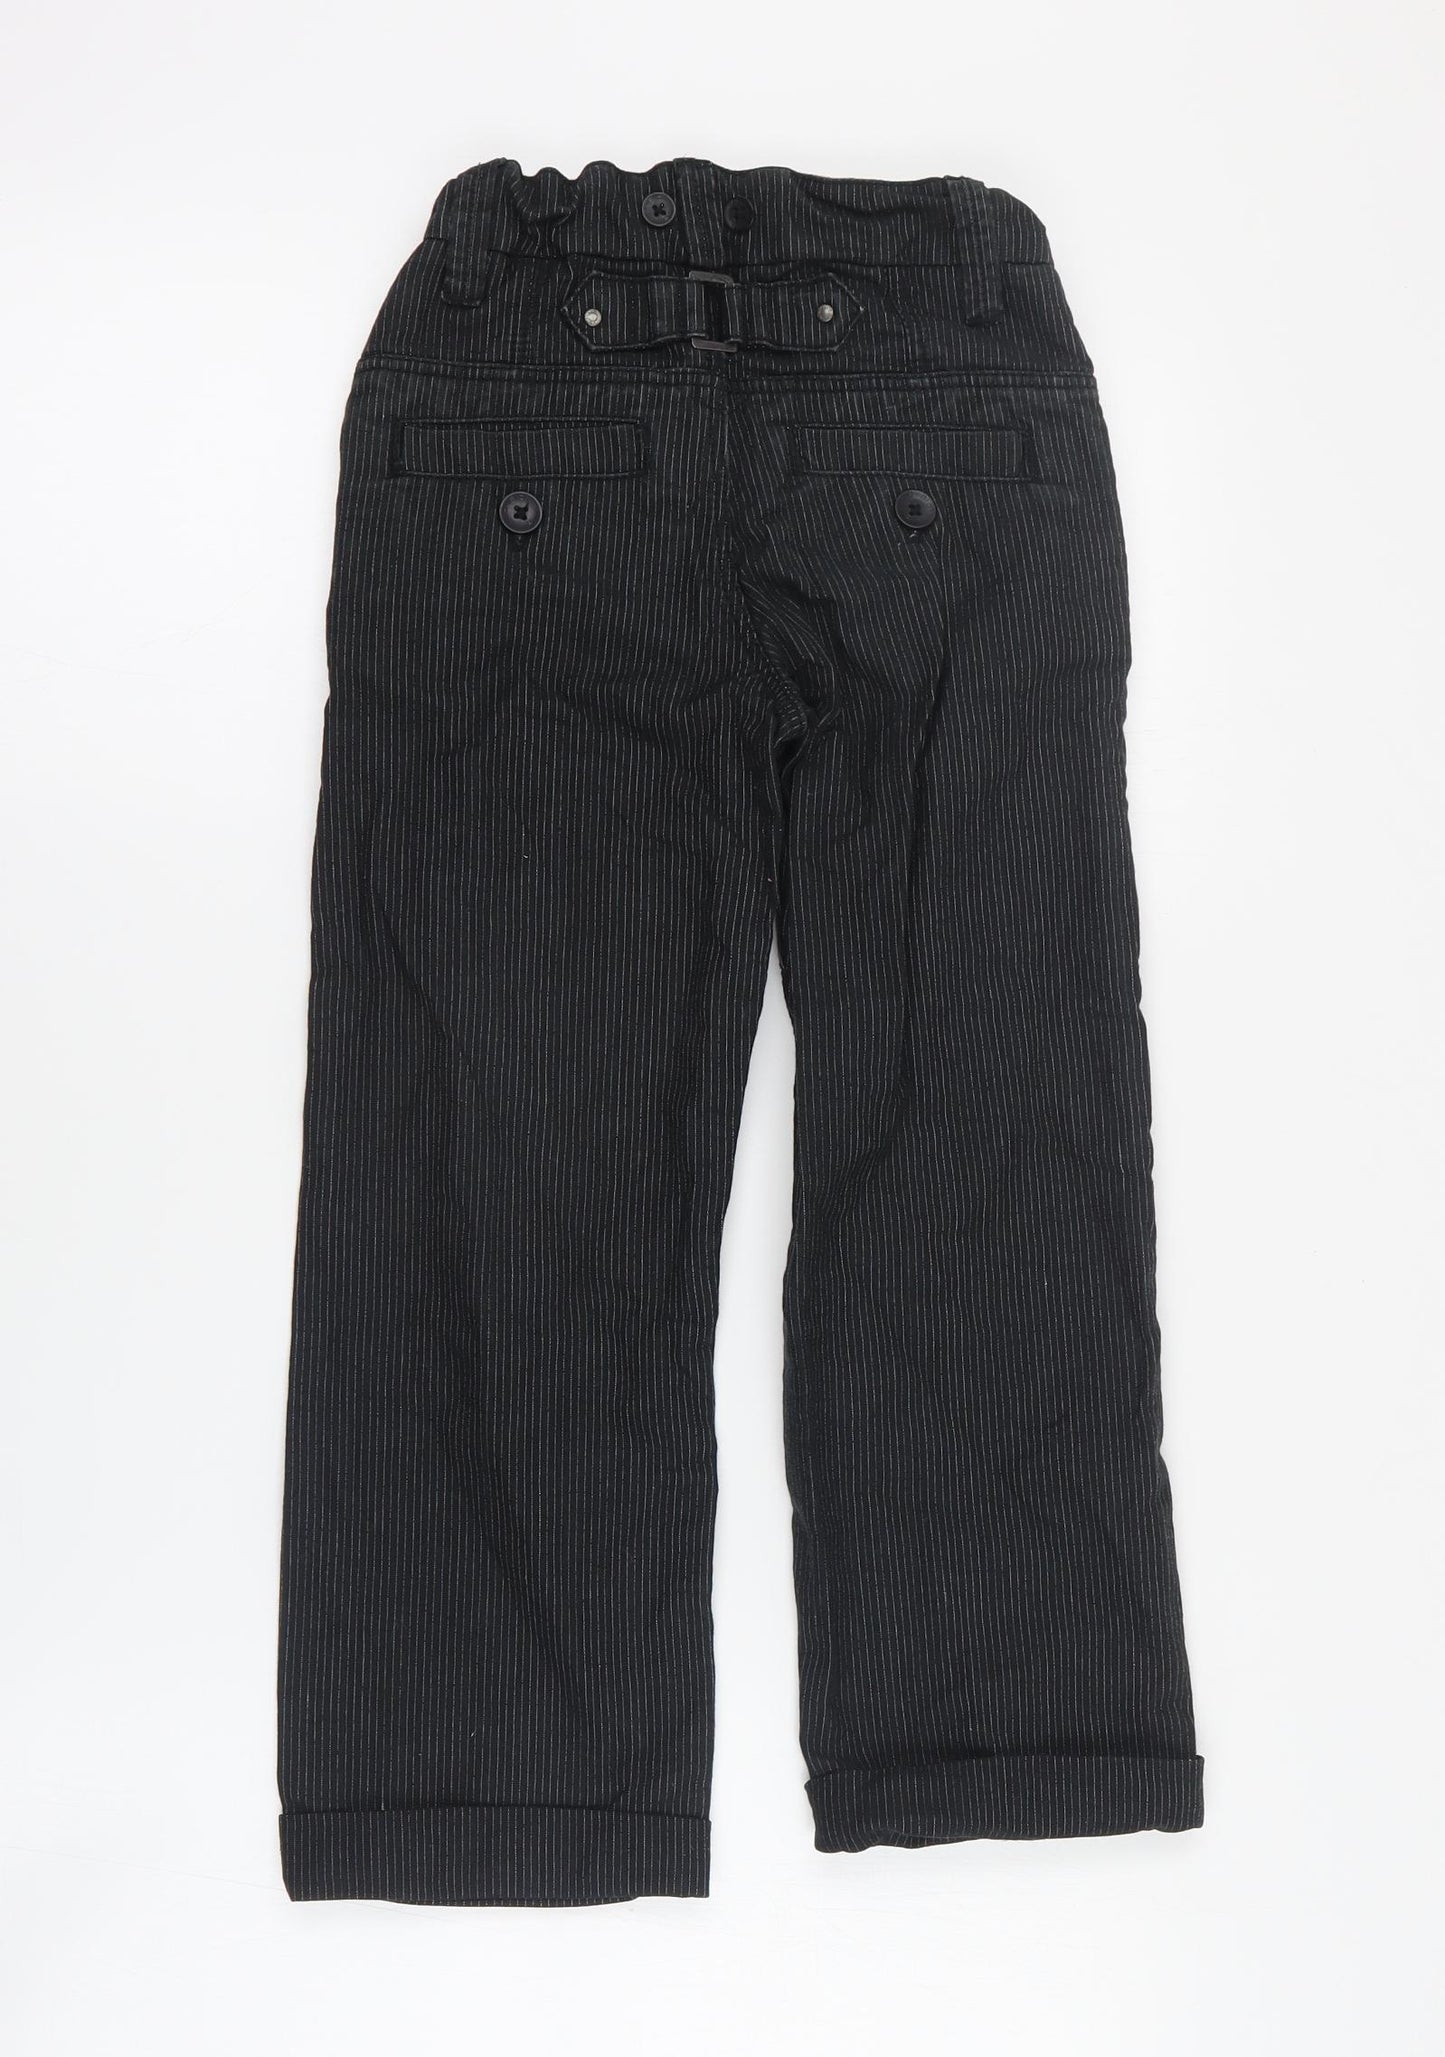 Okaidi Boys Black Striped Cotton Straight Jeans Size 8 Years  Regular Button